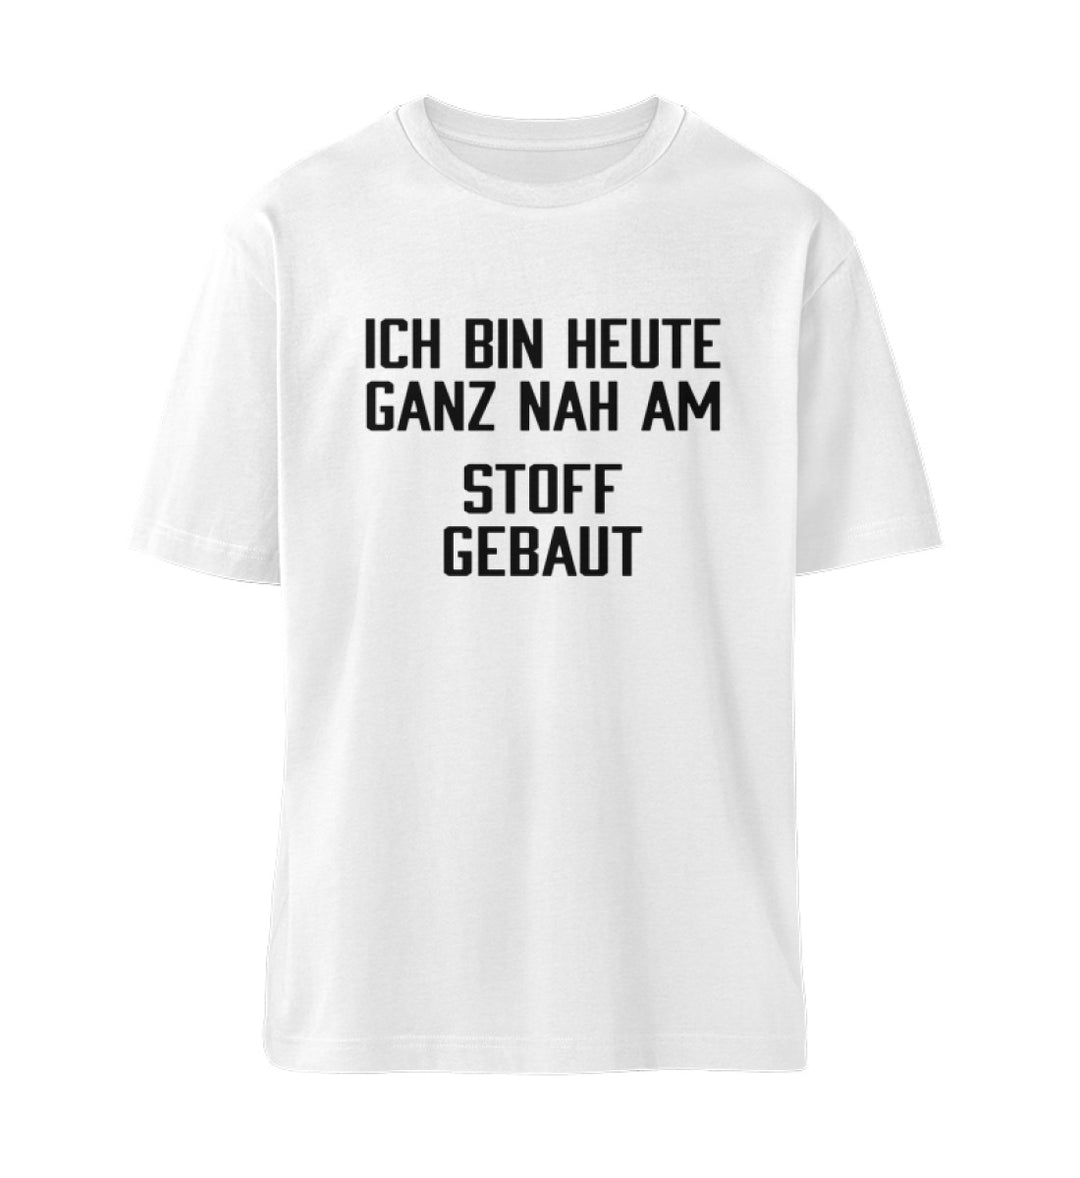 ICH BIN HEUTE GANZ NAH AM STOFF GEBAUT   - Bio Relaxed Shirt Unisex